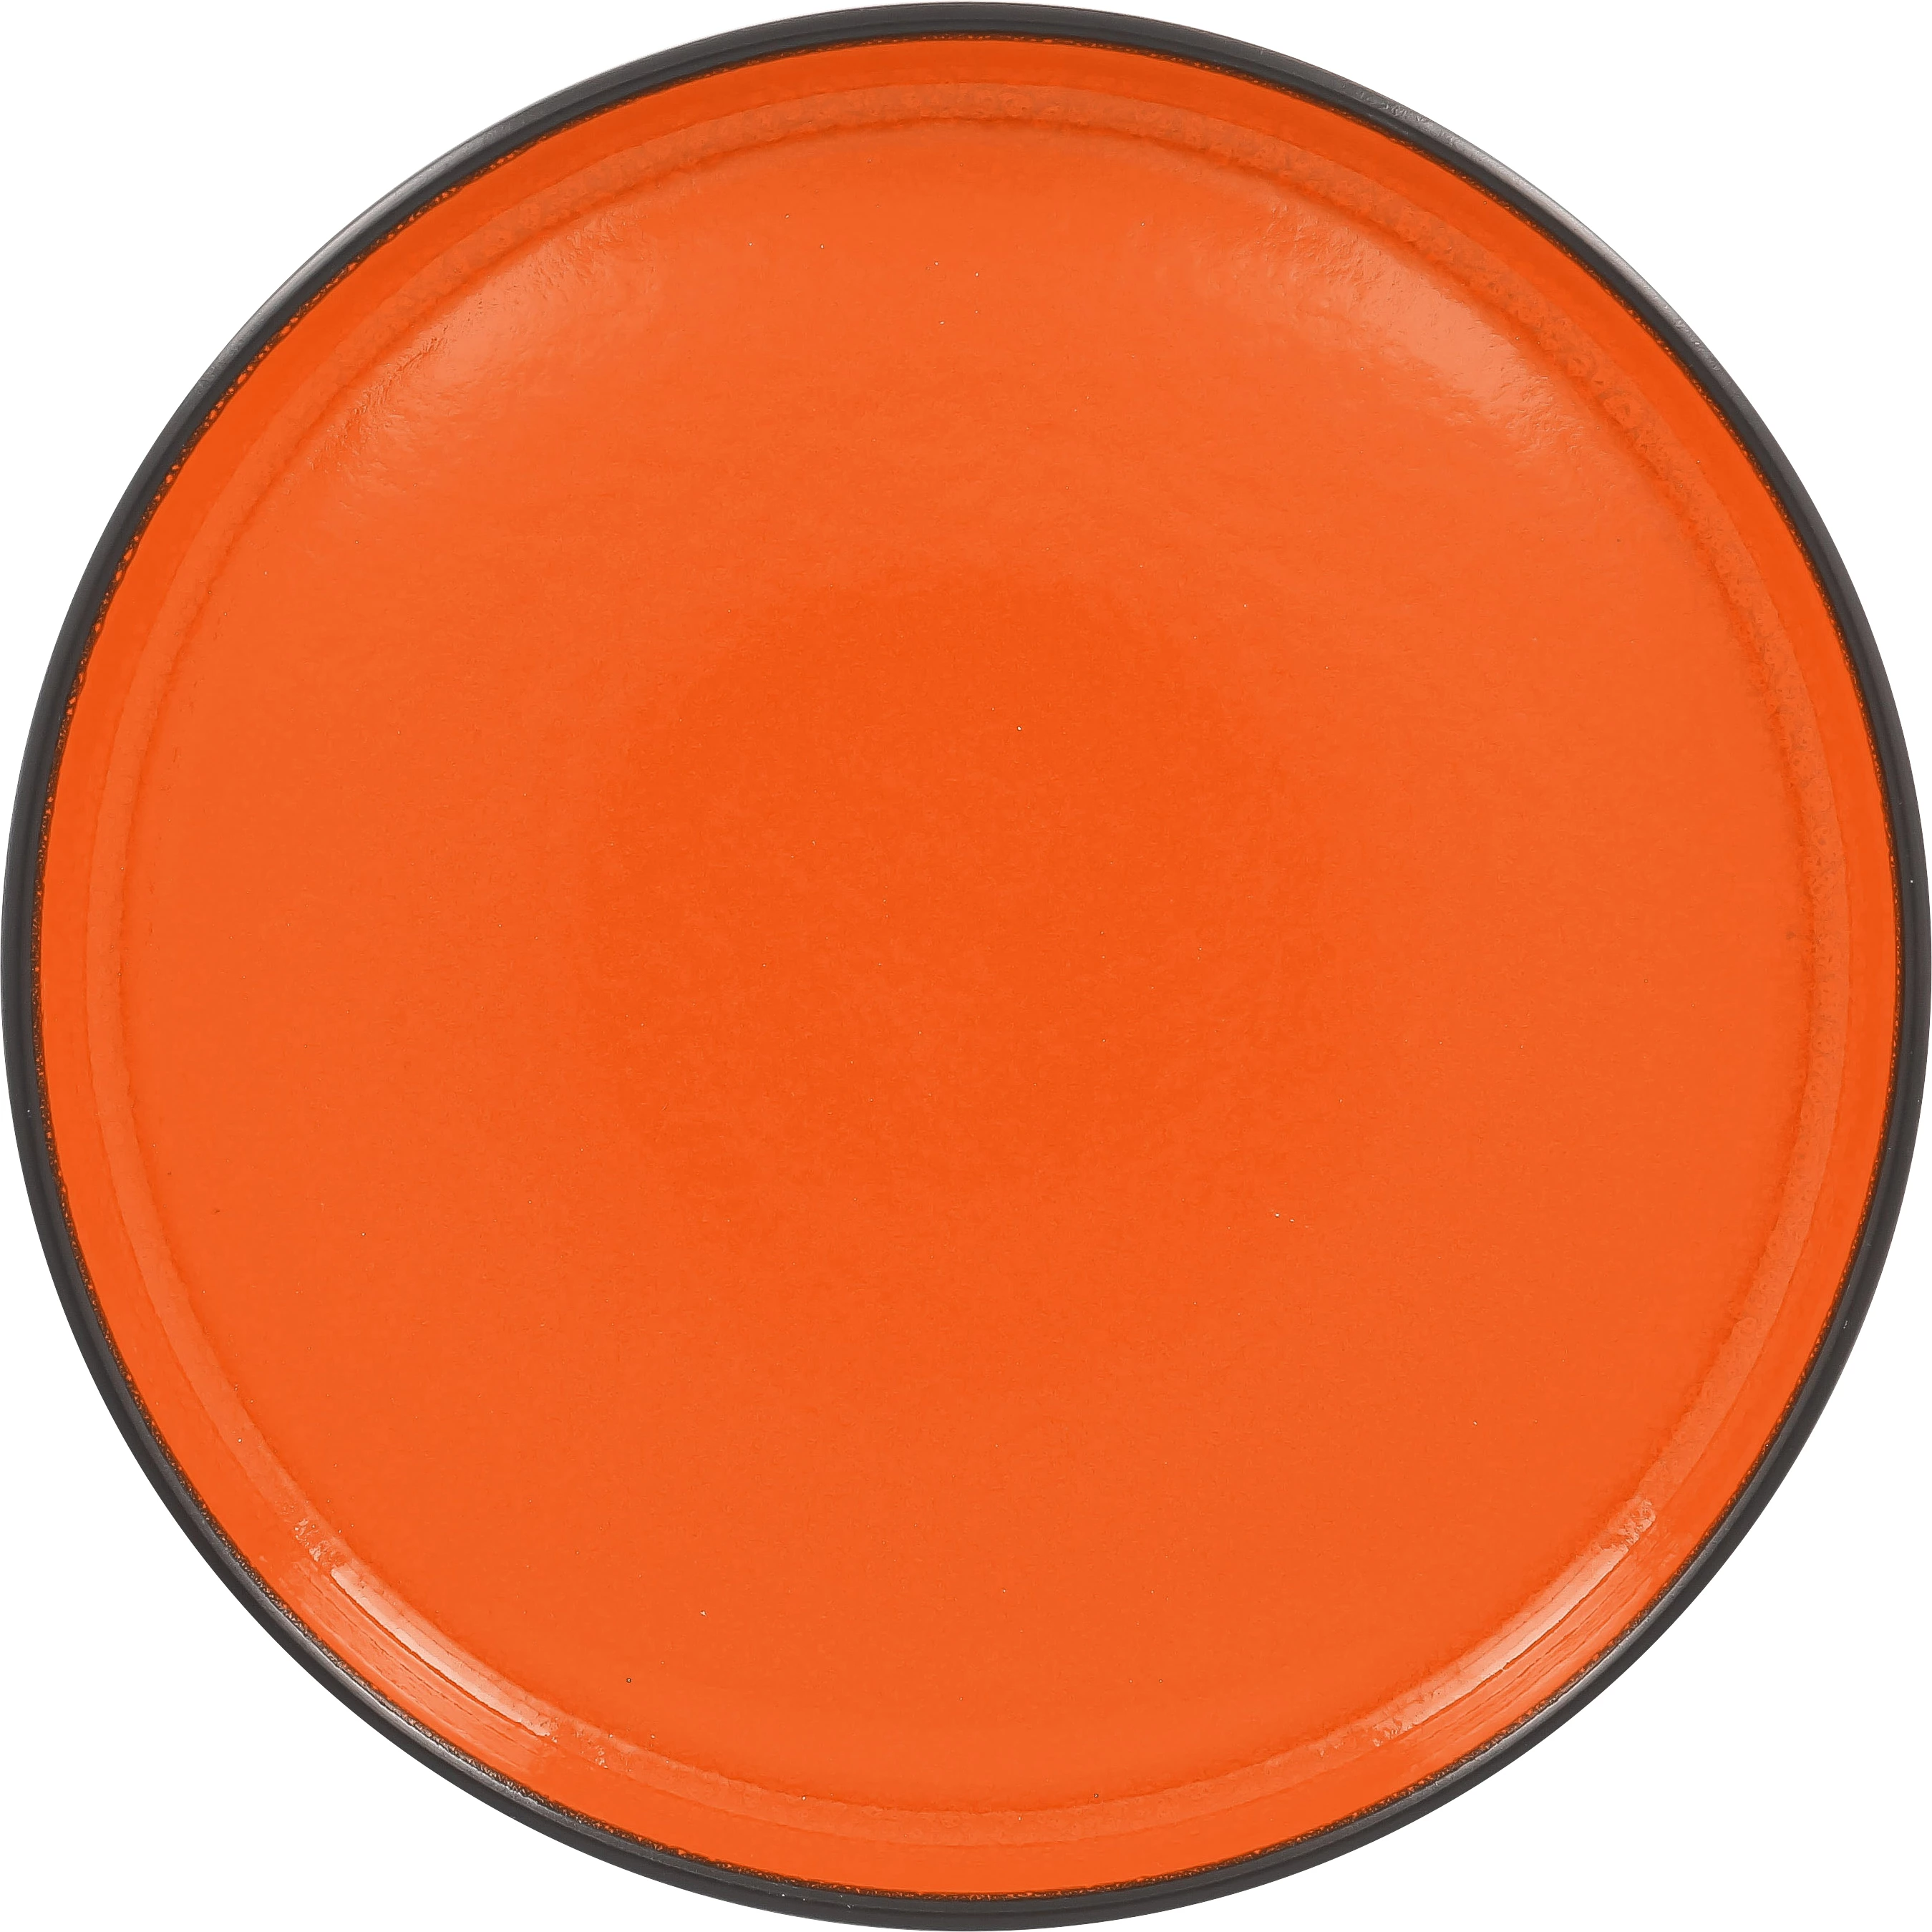 RAK Fire dyb tallerken, orange, ø27 cm